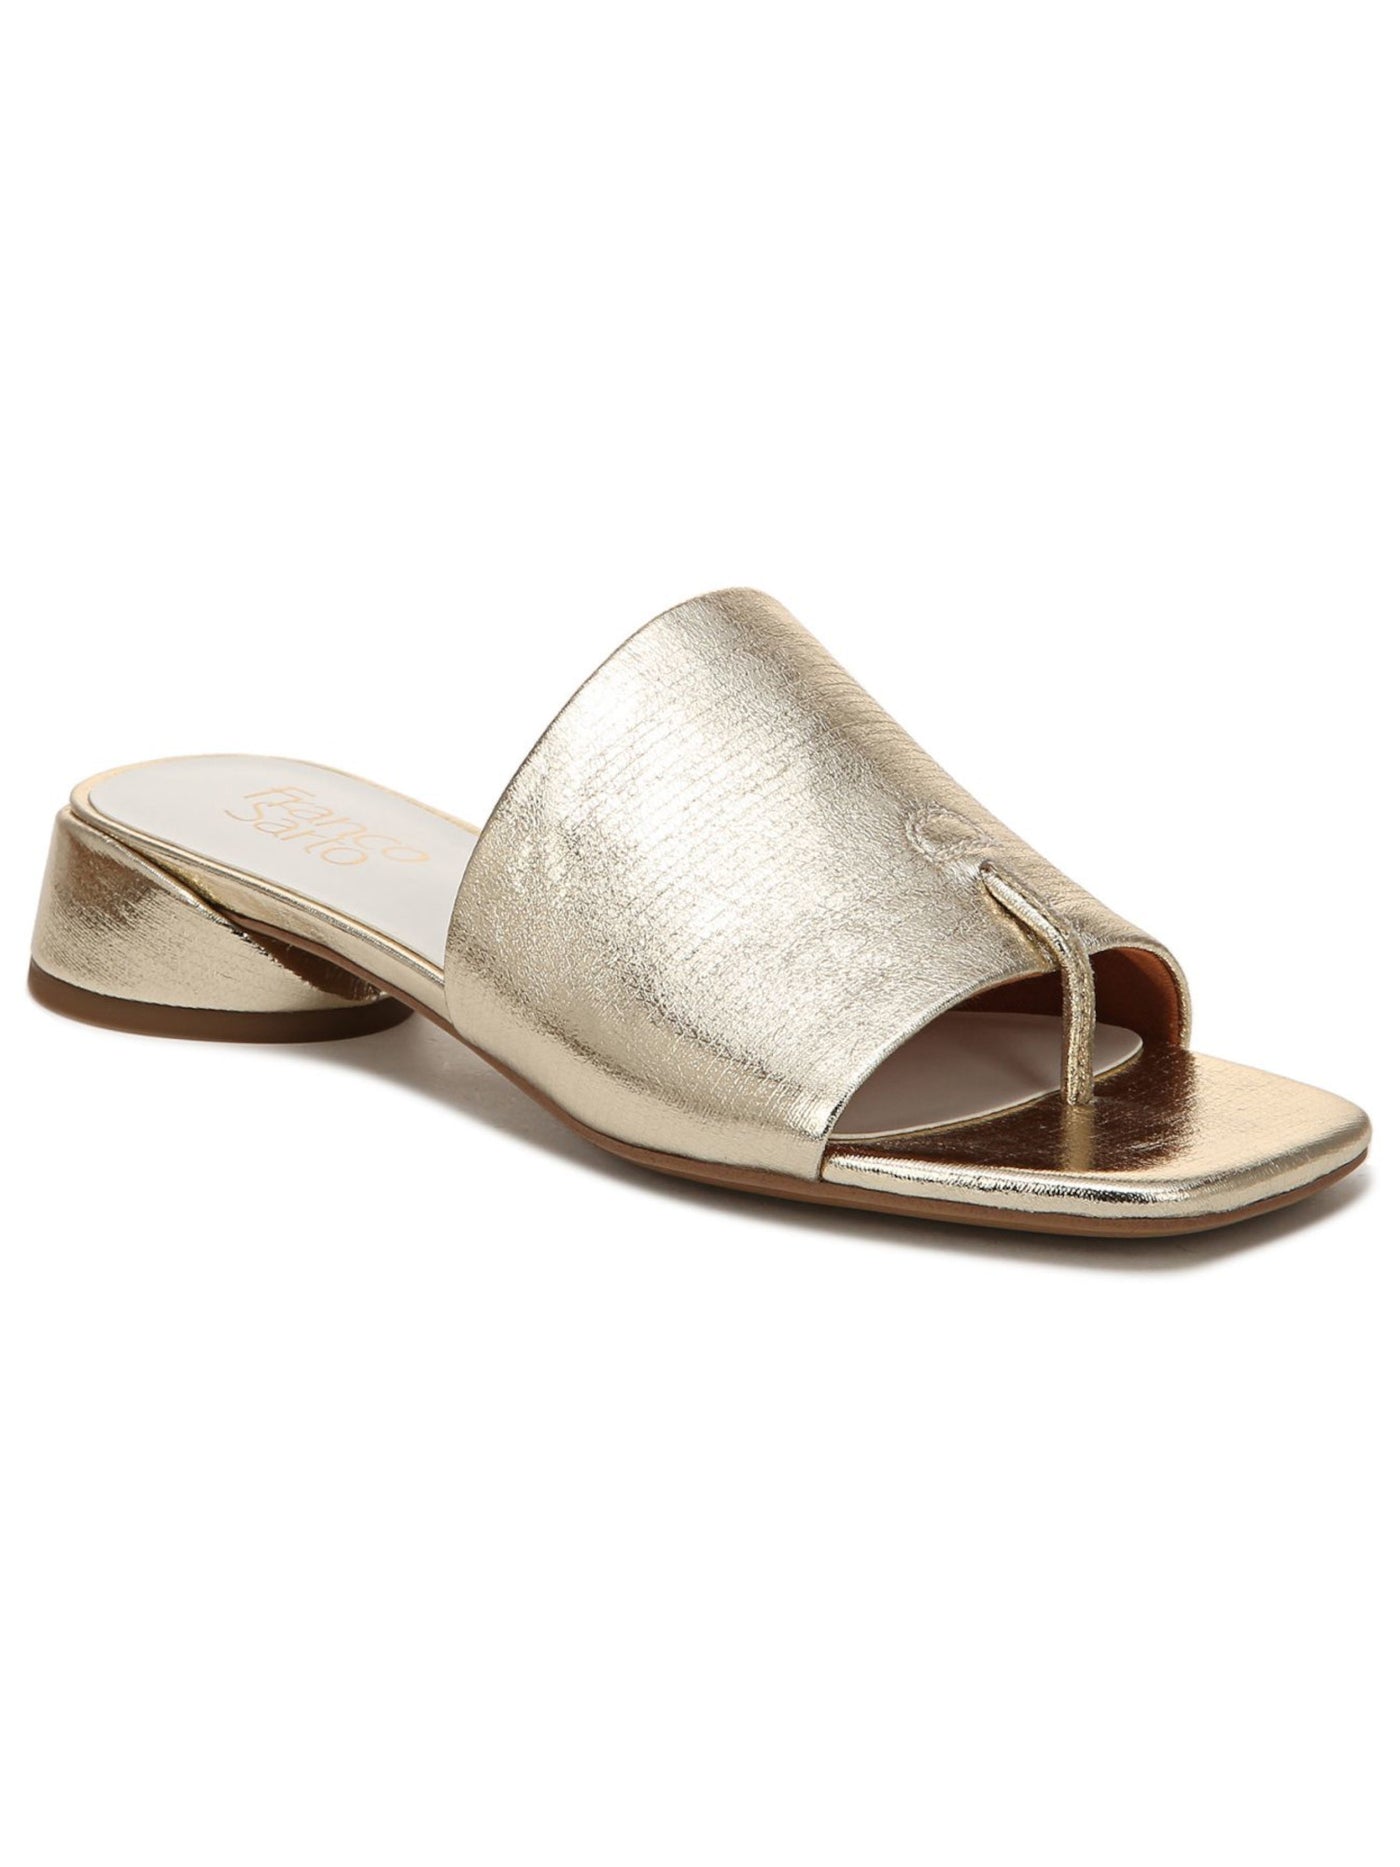 FRANCO SARTO Womens Gold Toe Strap Padded Loran Square Toe Block Heel Slip On Dress Sandals Shoes 5 M